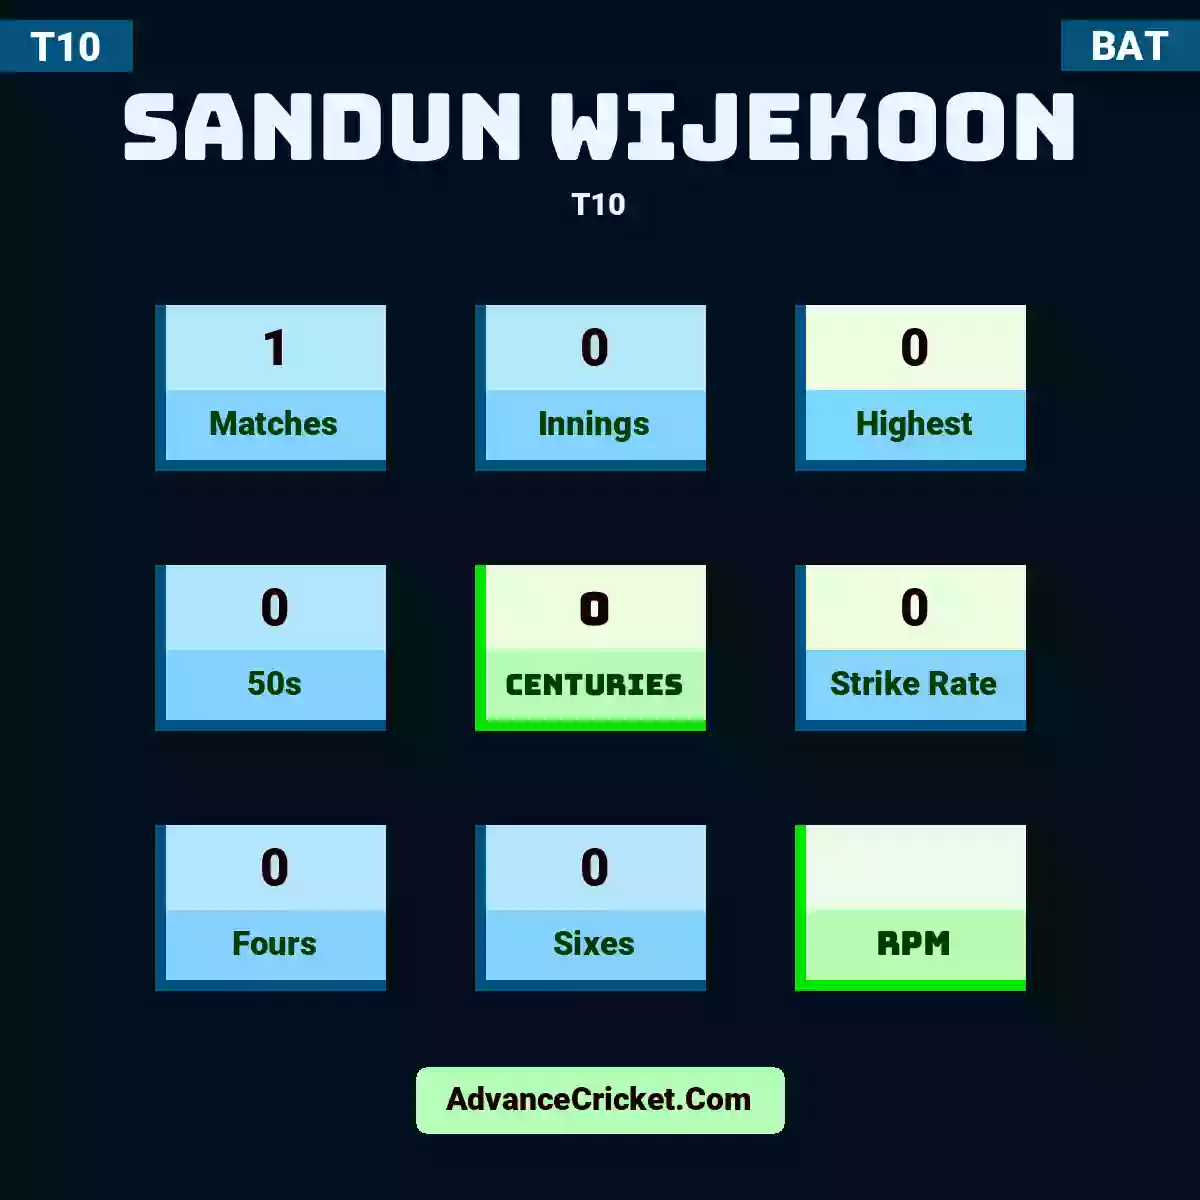 Sandun Wijekoon T10 , Sandun Wijekoon played 1 matches, scored 0 runs as highest, 0 half-centuries, and 0 centuries, with a strike rate of 0. S.Wijekoon hit 0 fours and 0 sixes.